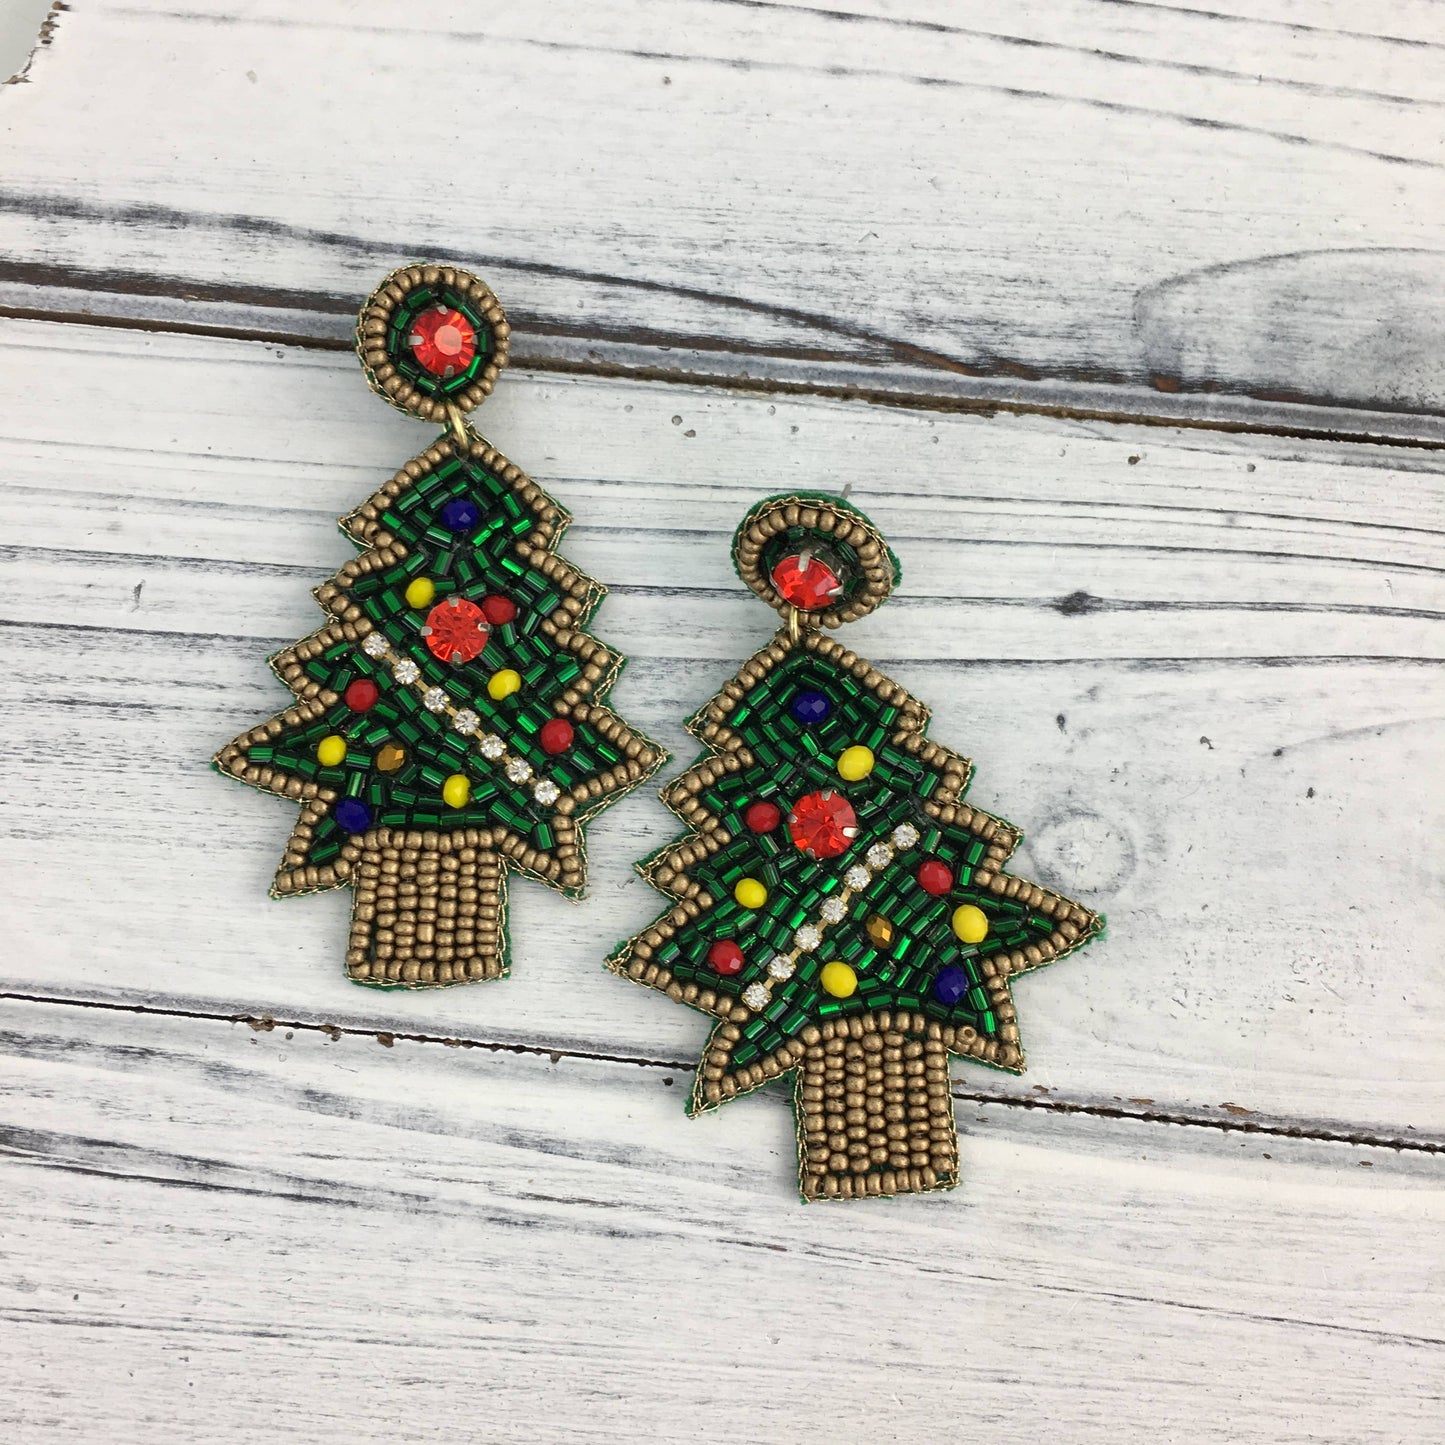 Beaded green Christmas tree earrings